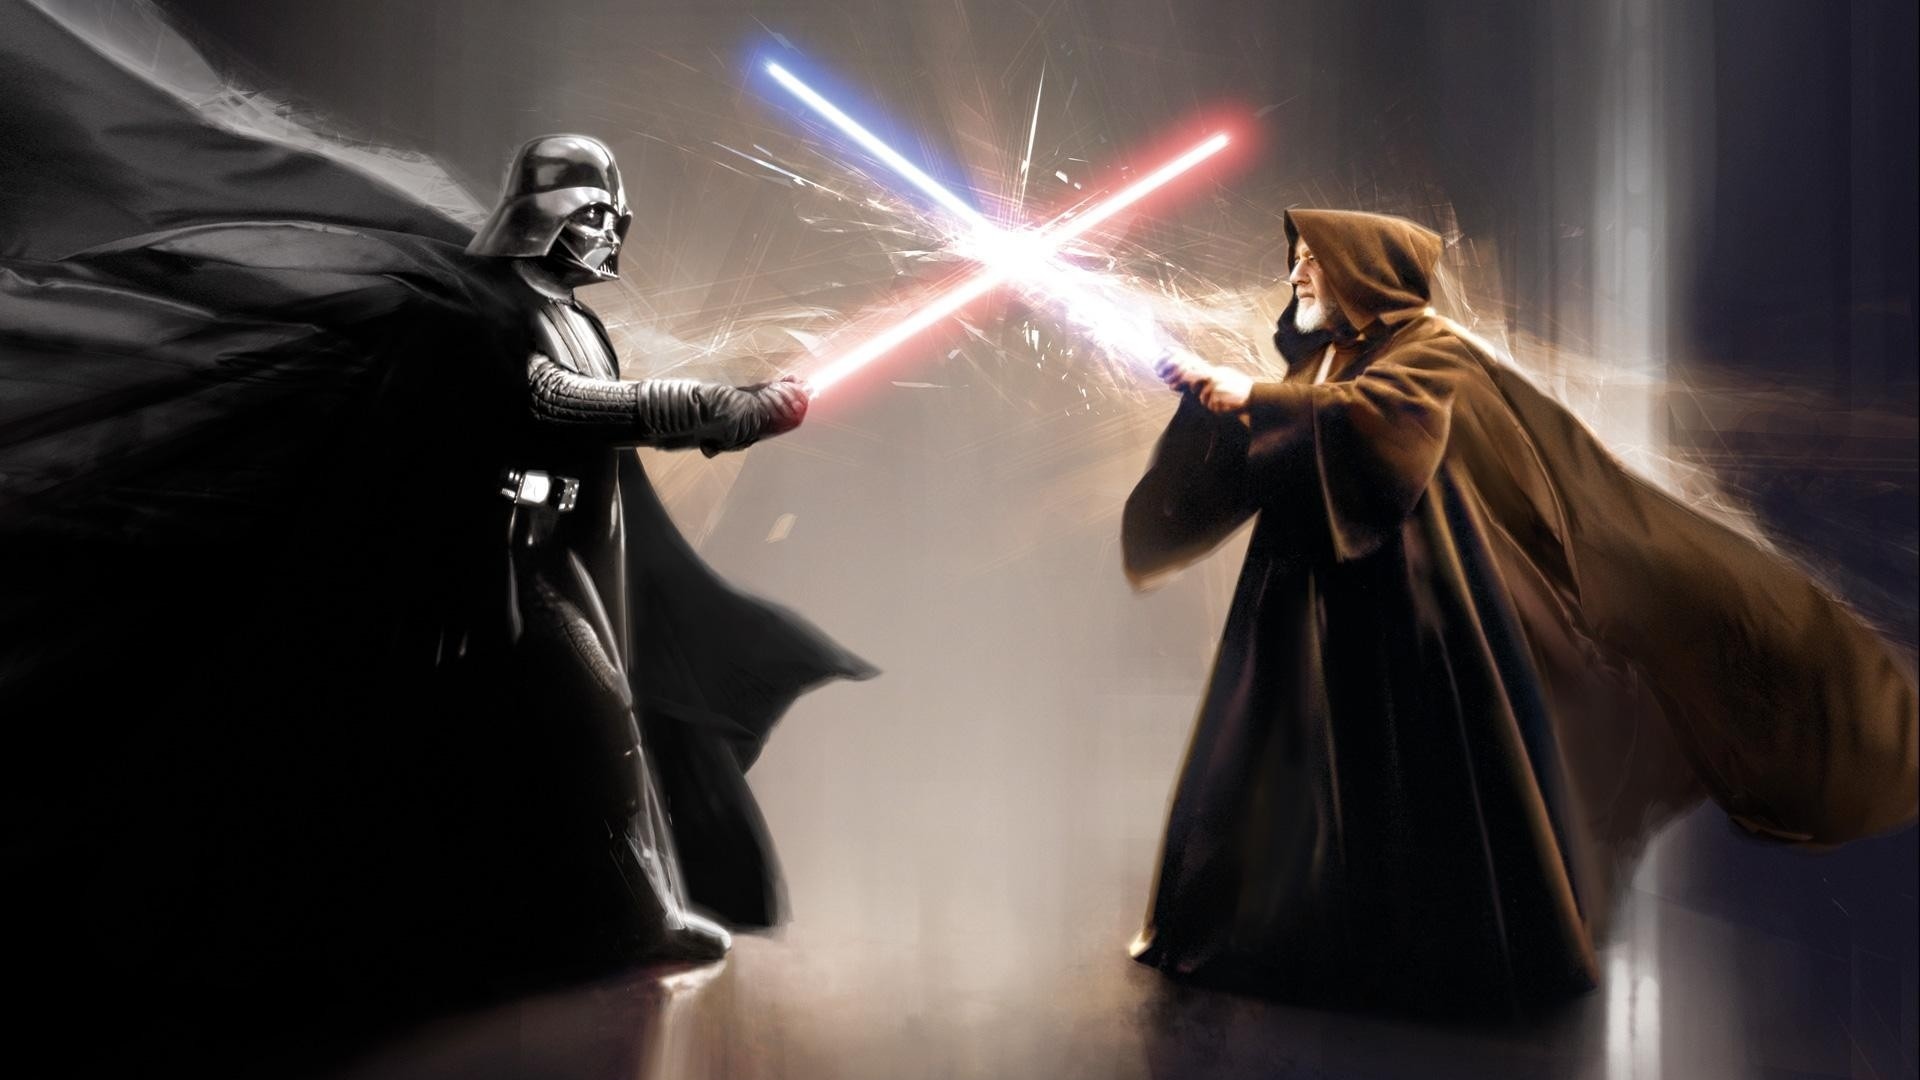 Darth Vader Obi Wan Kenobi movies star wars sci fi weapons lightsaber